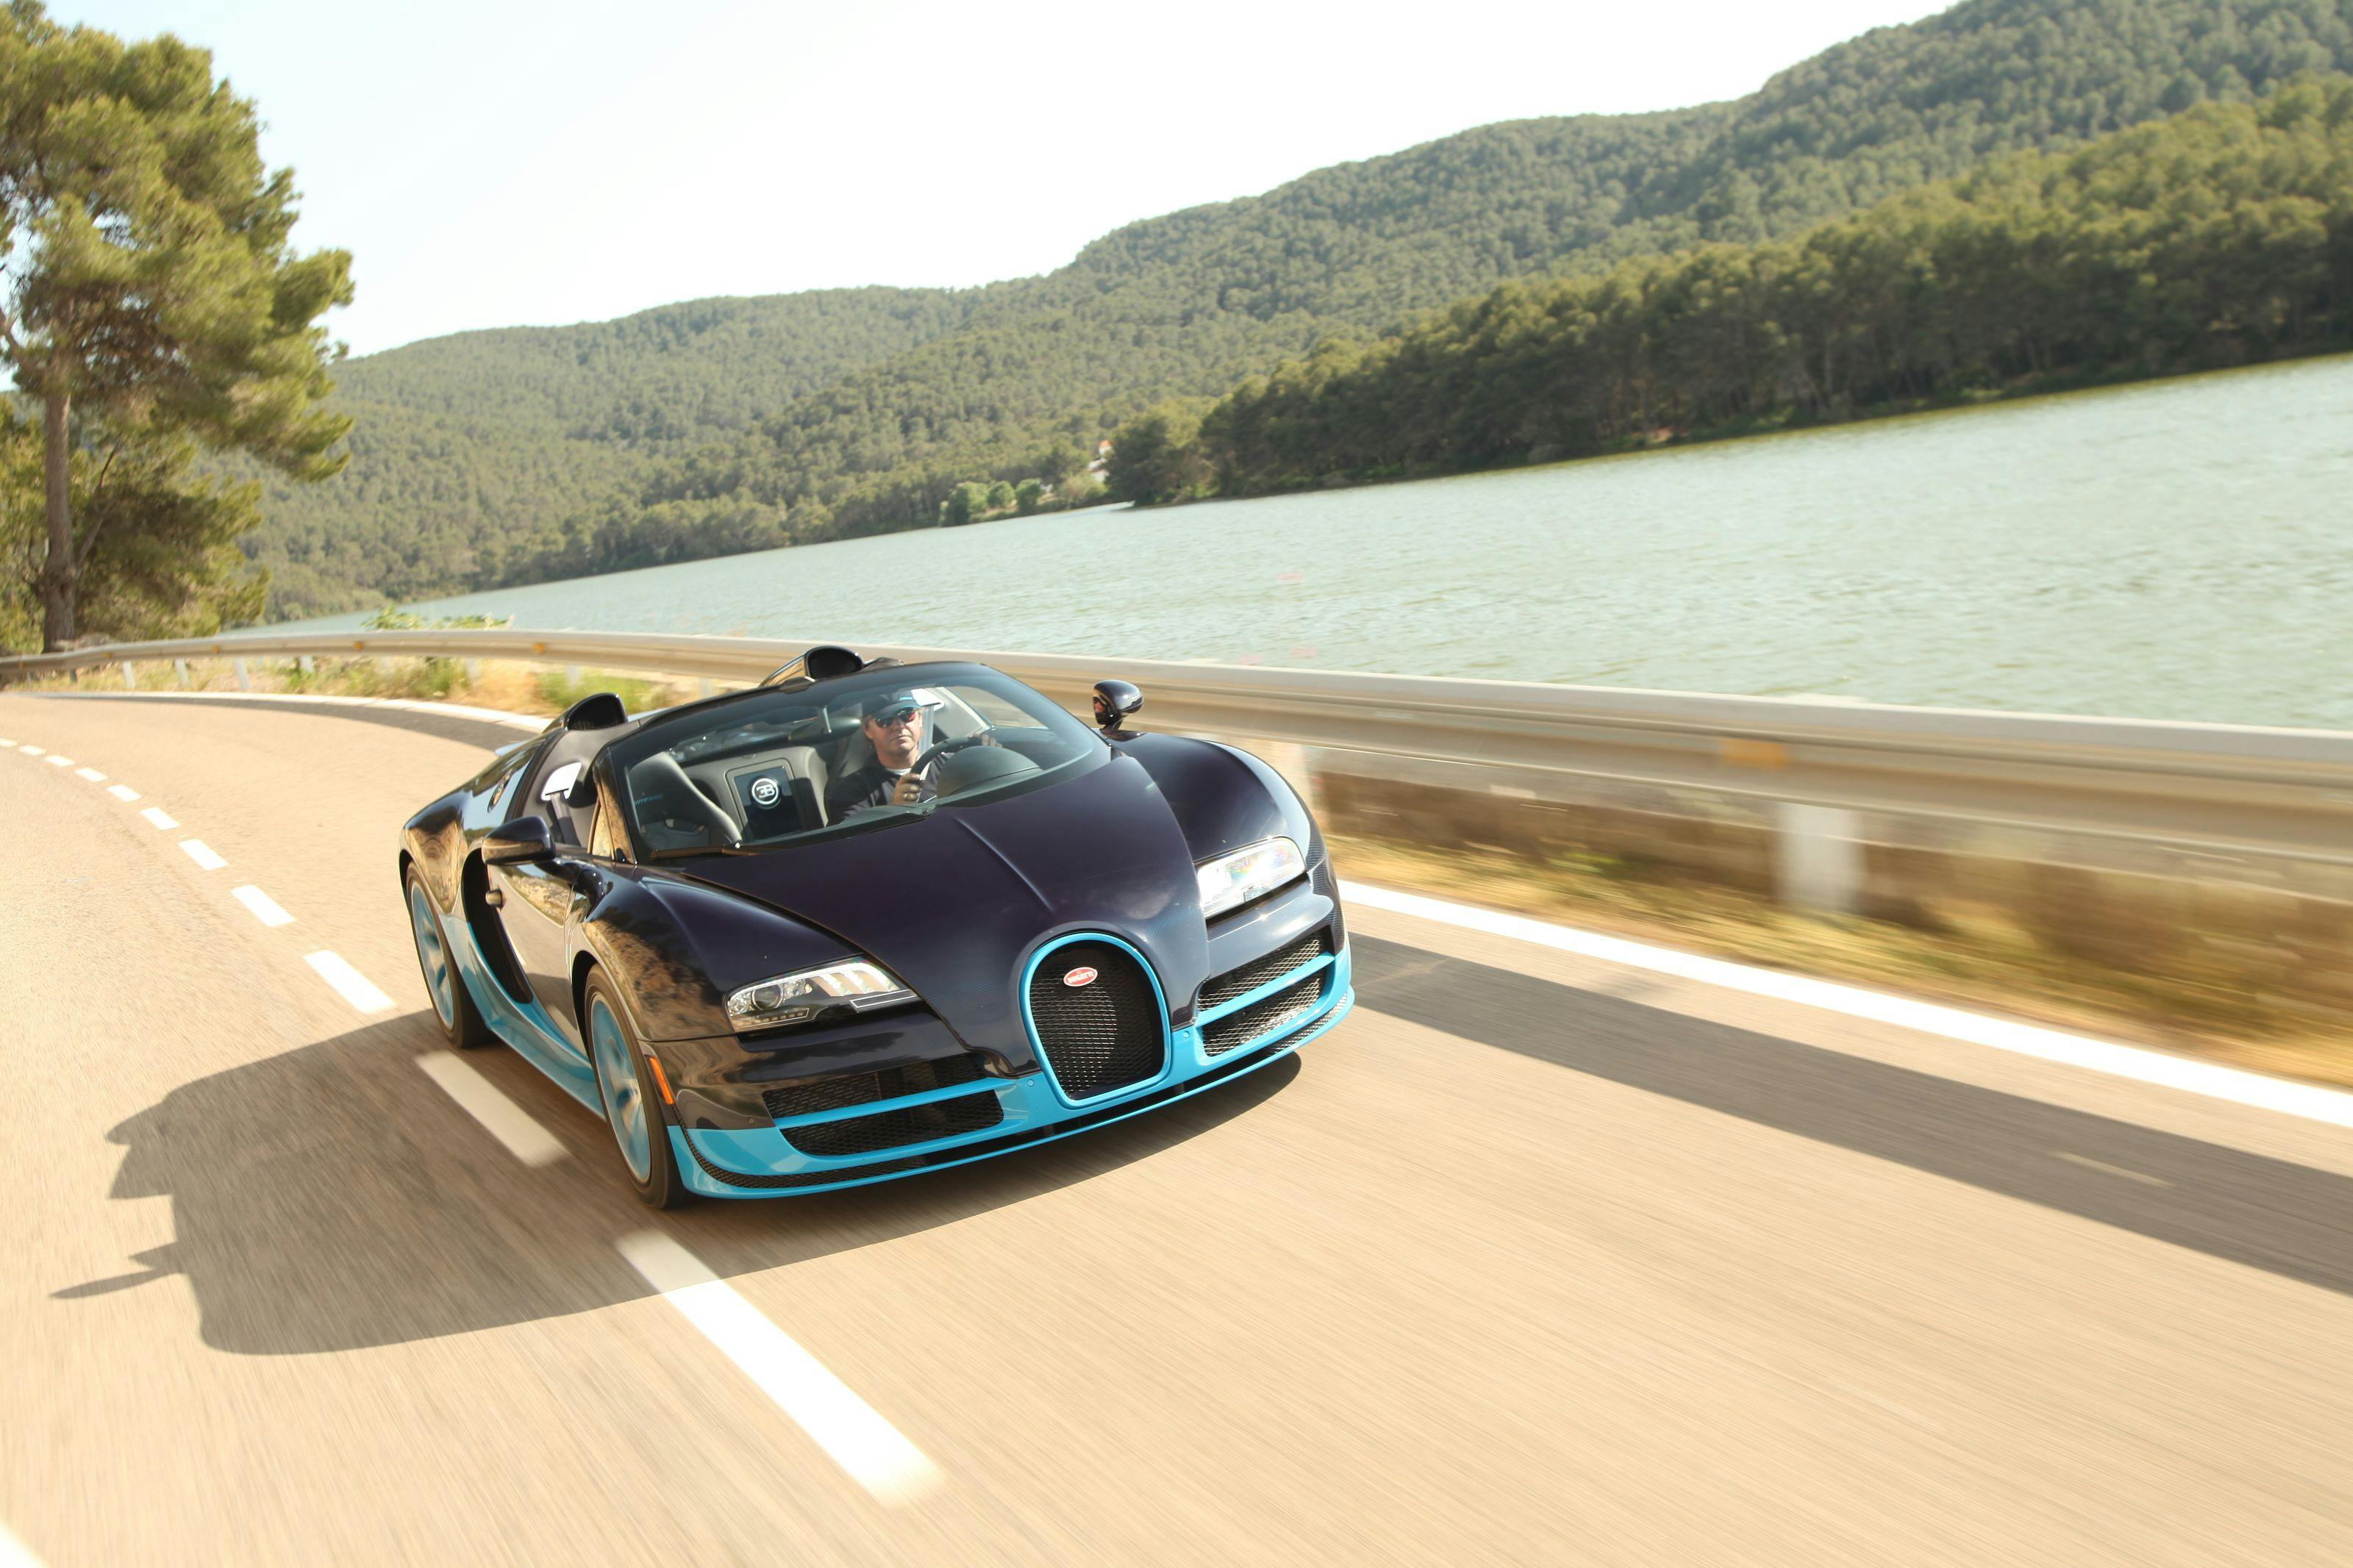 European press drives of the Bugatti Veyron 16.4 Grand Sport Vitesse